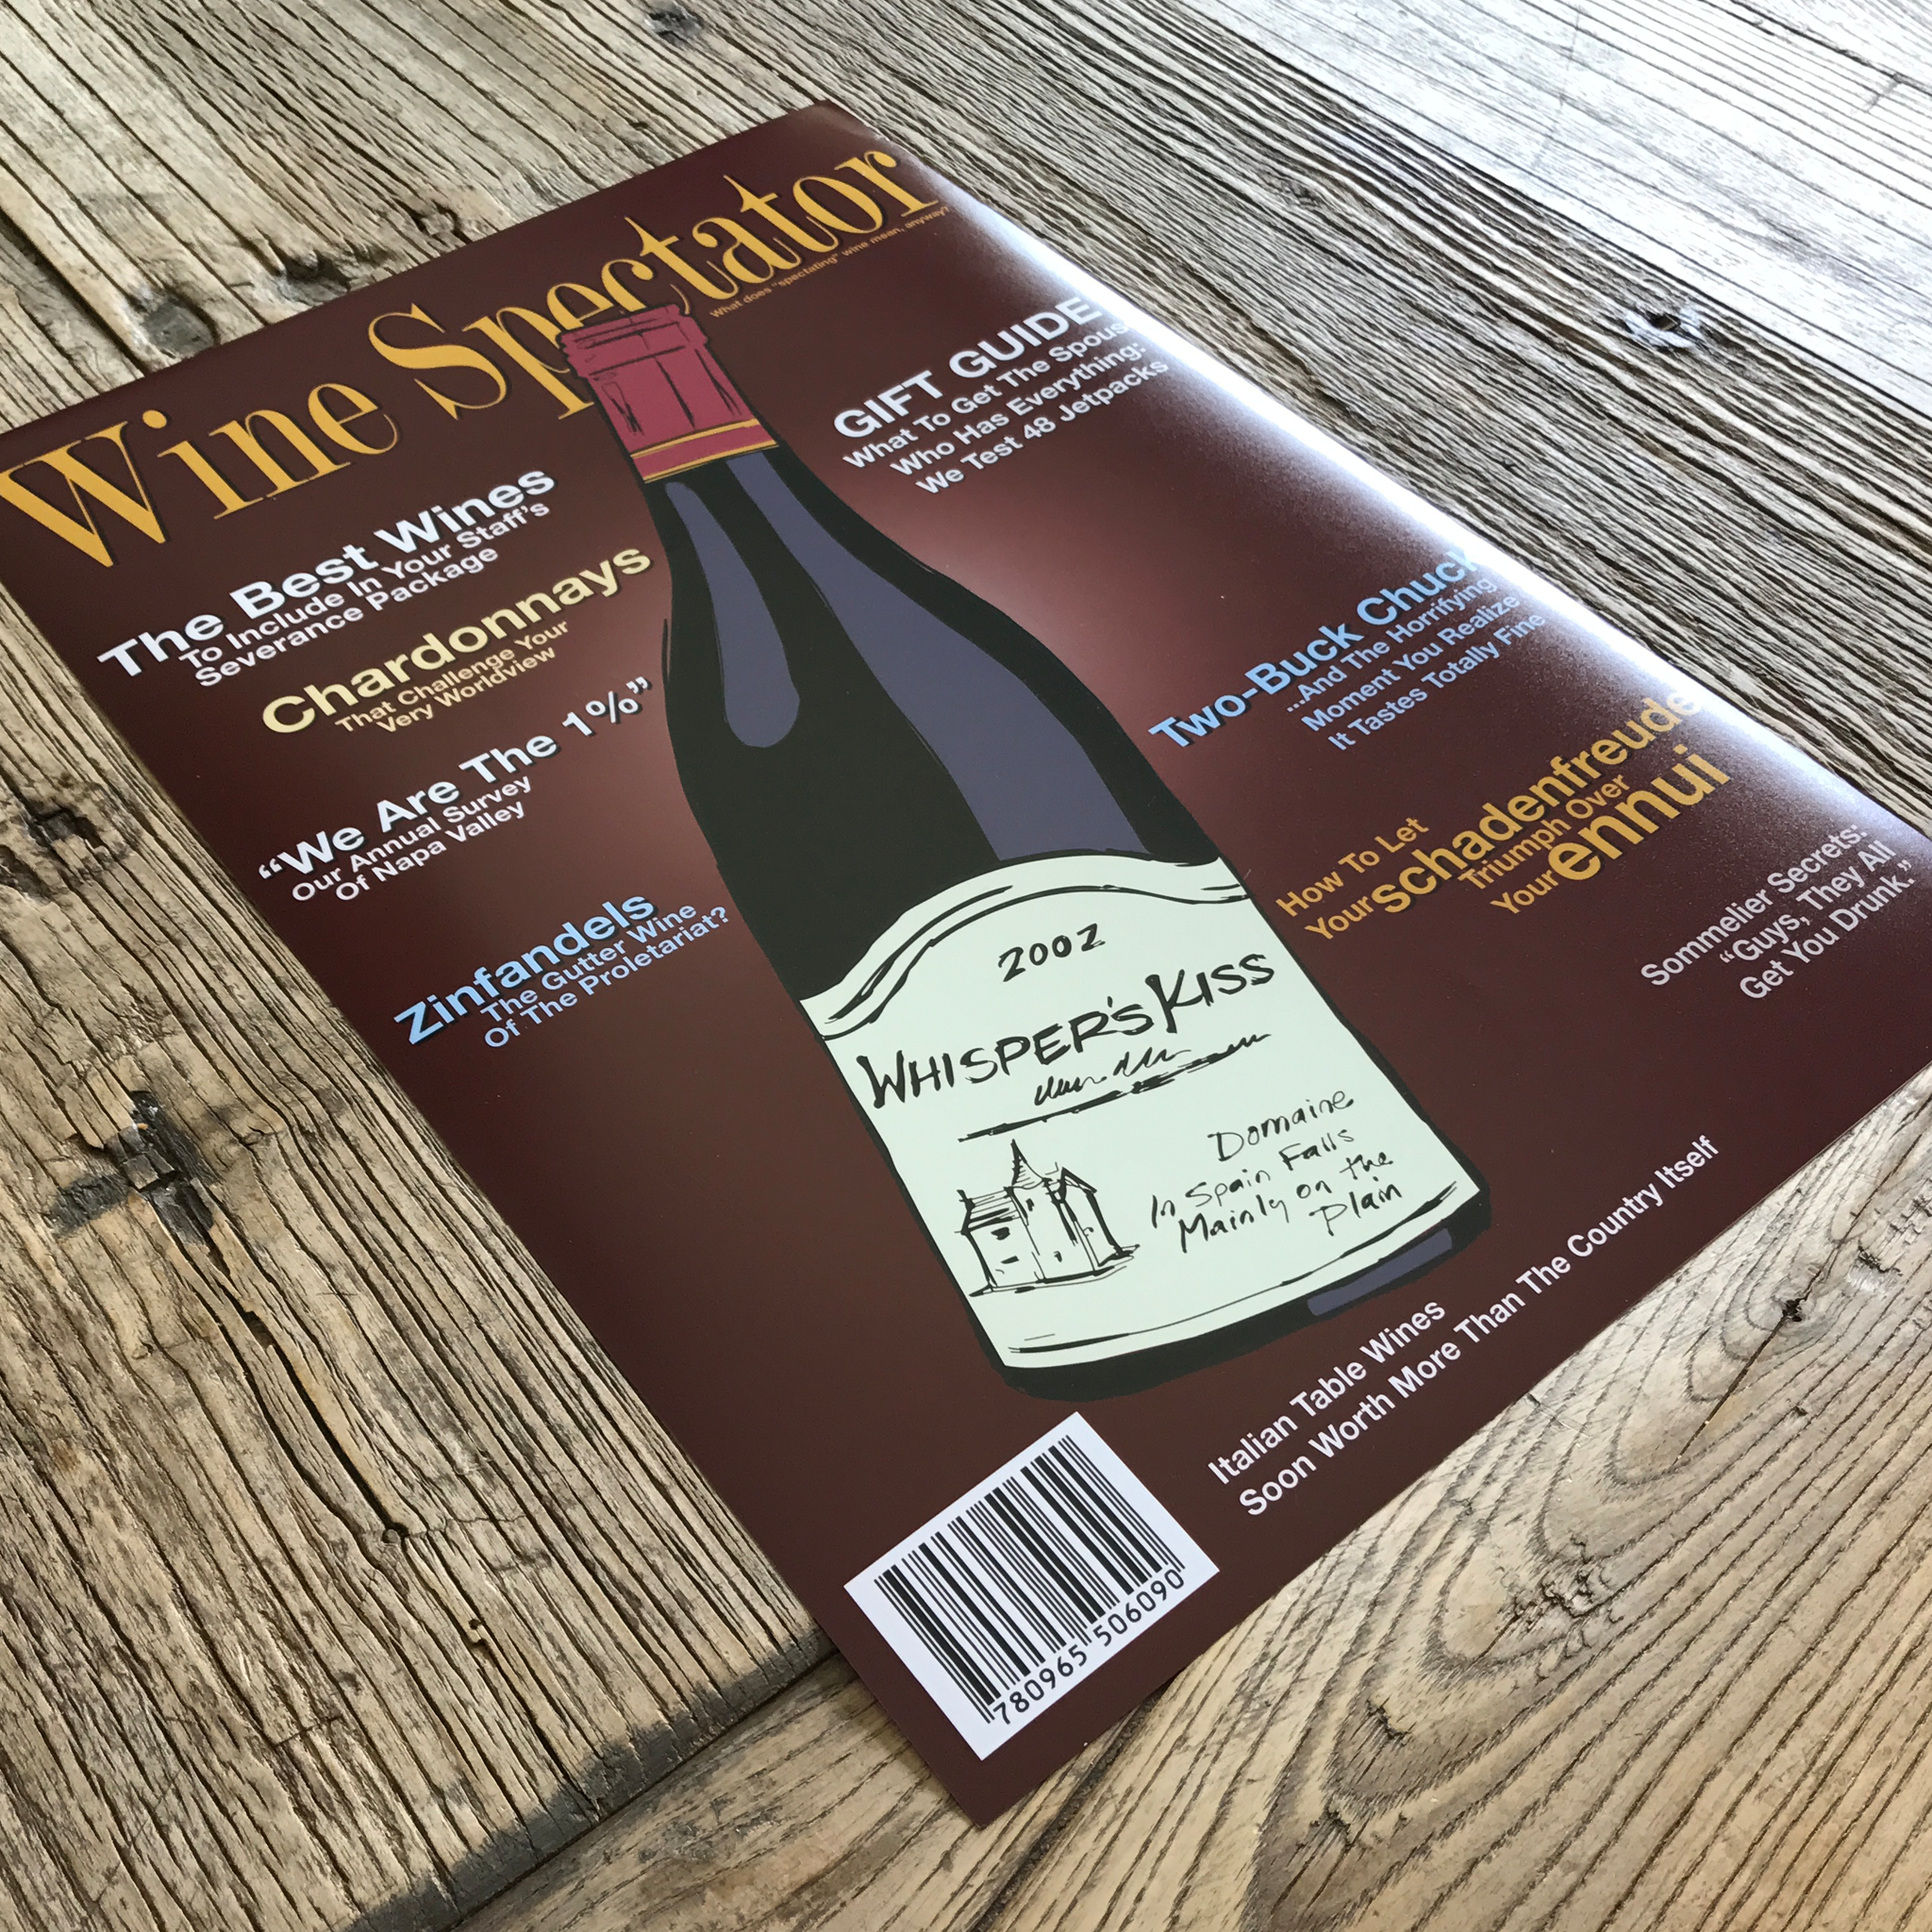 Print: The Language of Wine